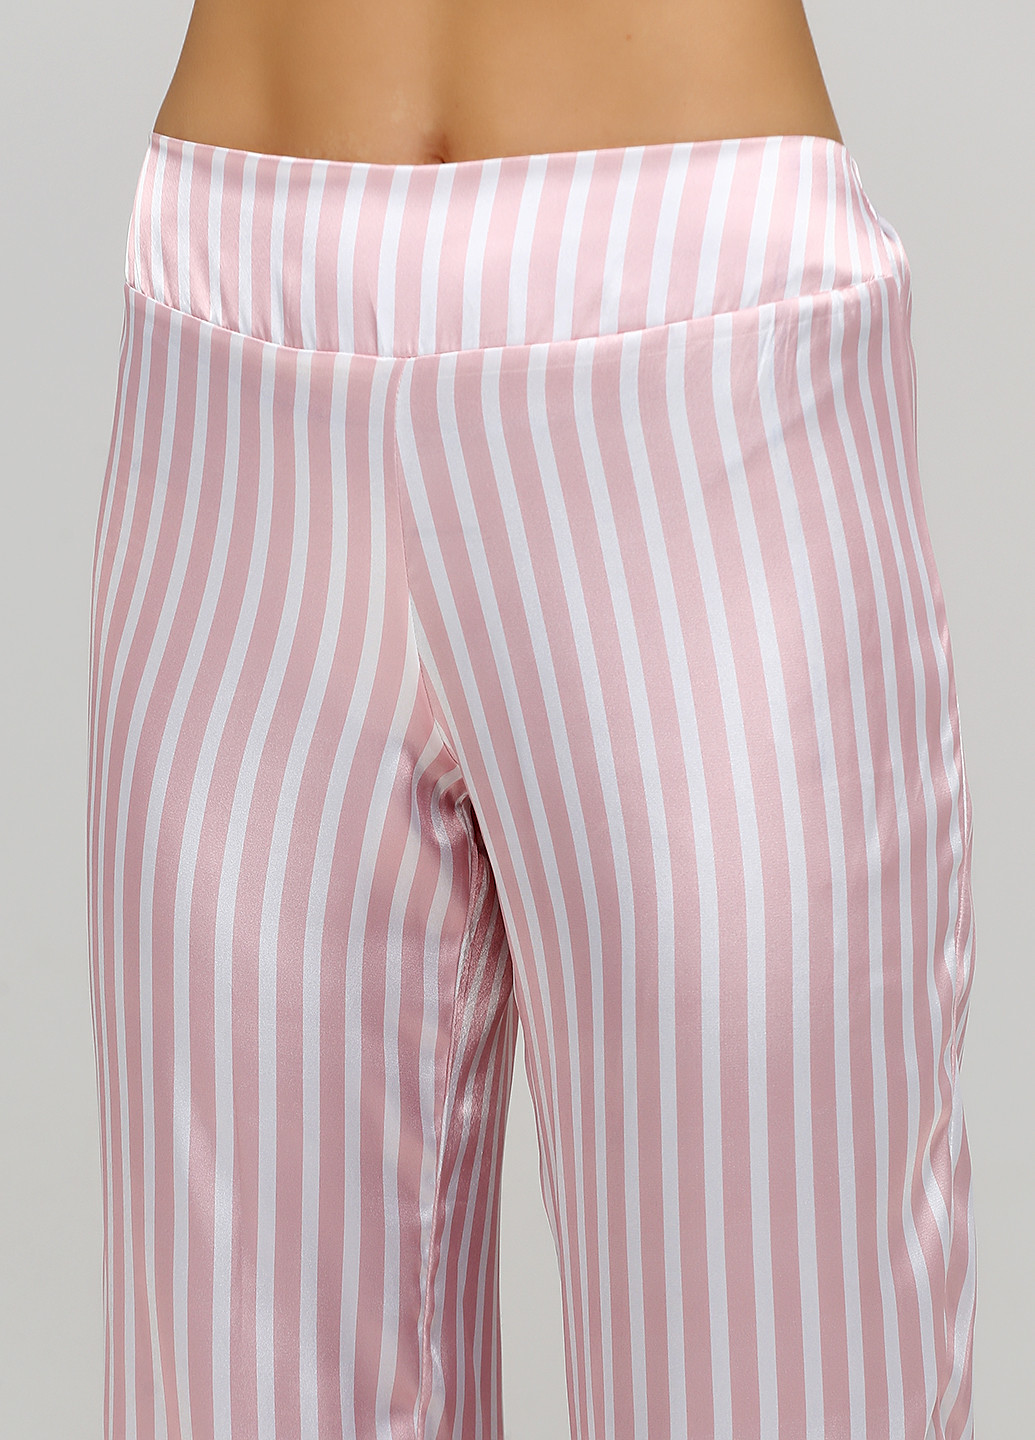 Розовая всесезон пижама (рубашка, брюки) рубашка + брюки Dominant